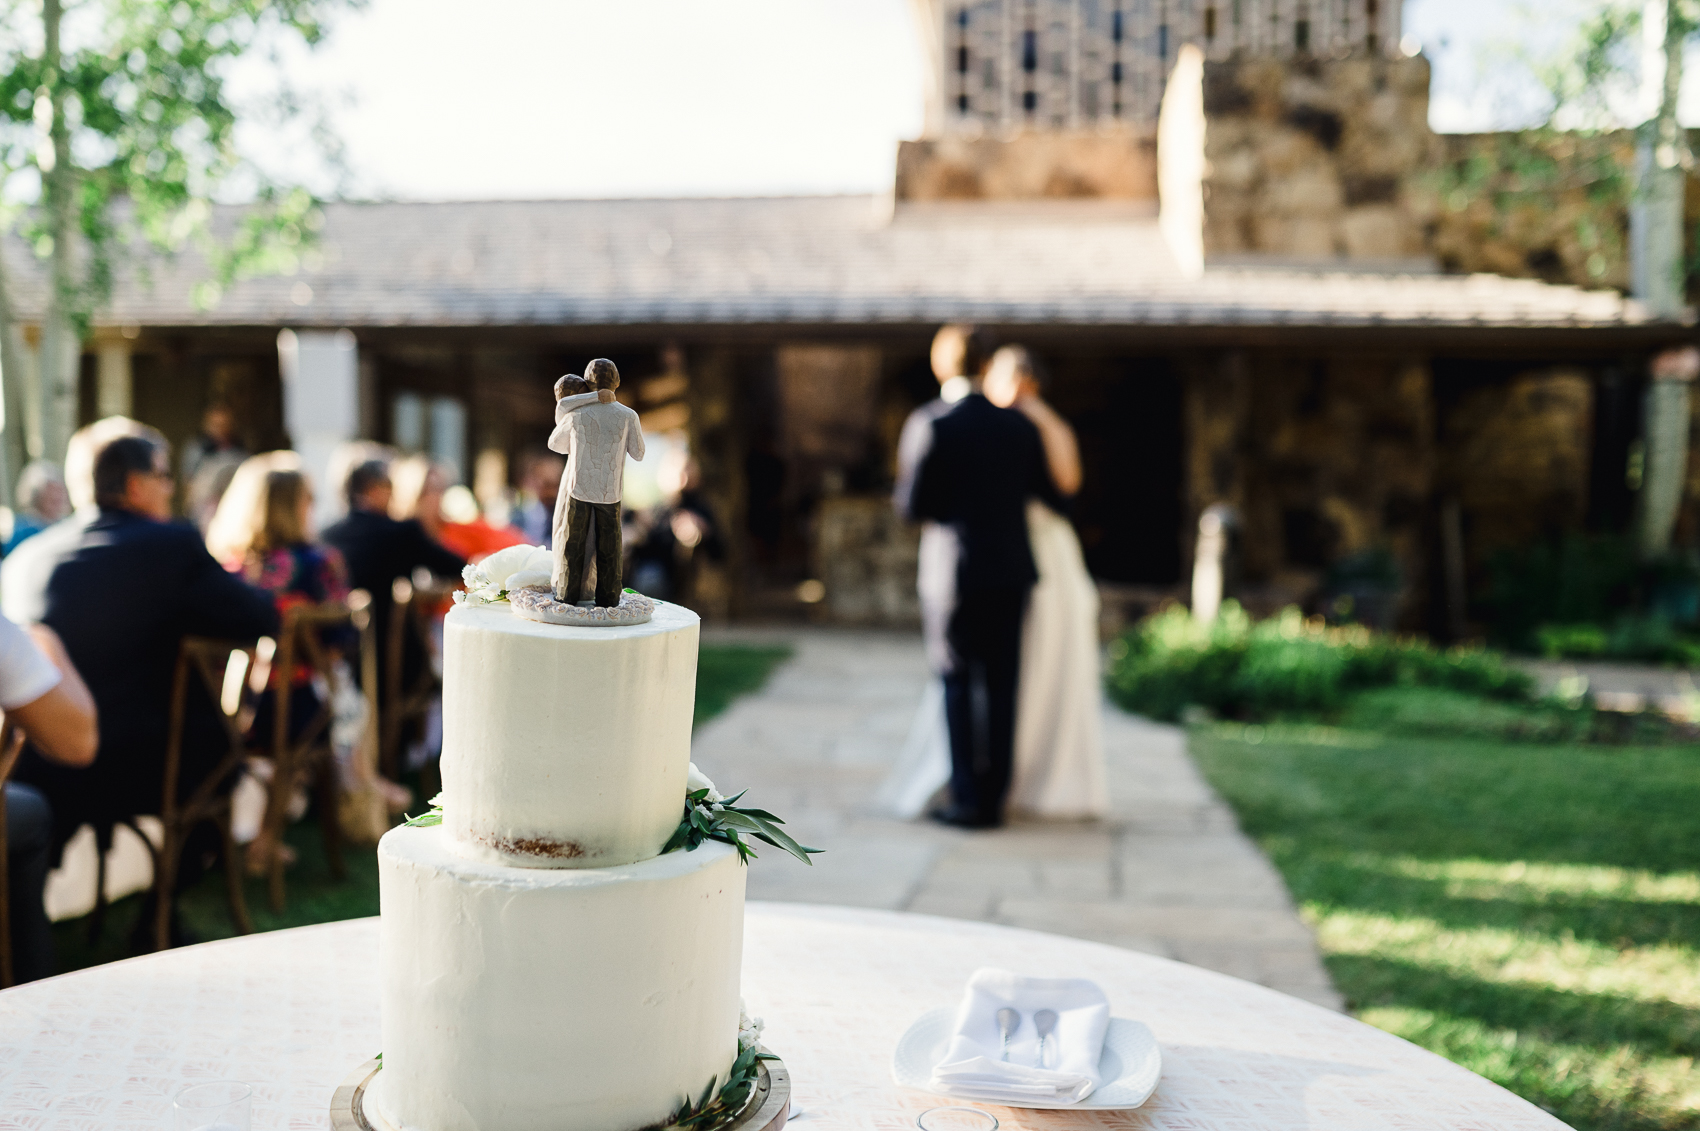 Aspen chapel wedding by colorado wedding photographers aspen elopement